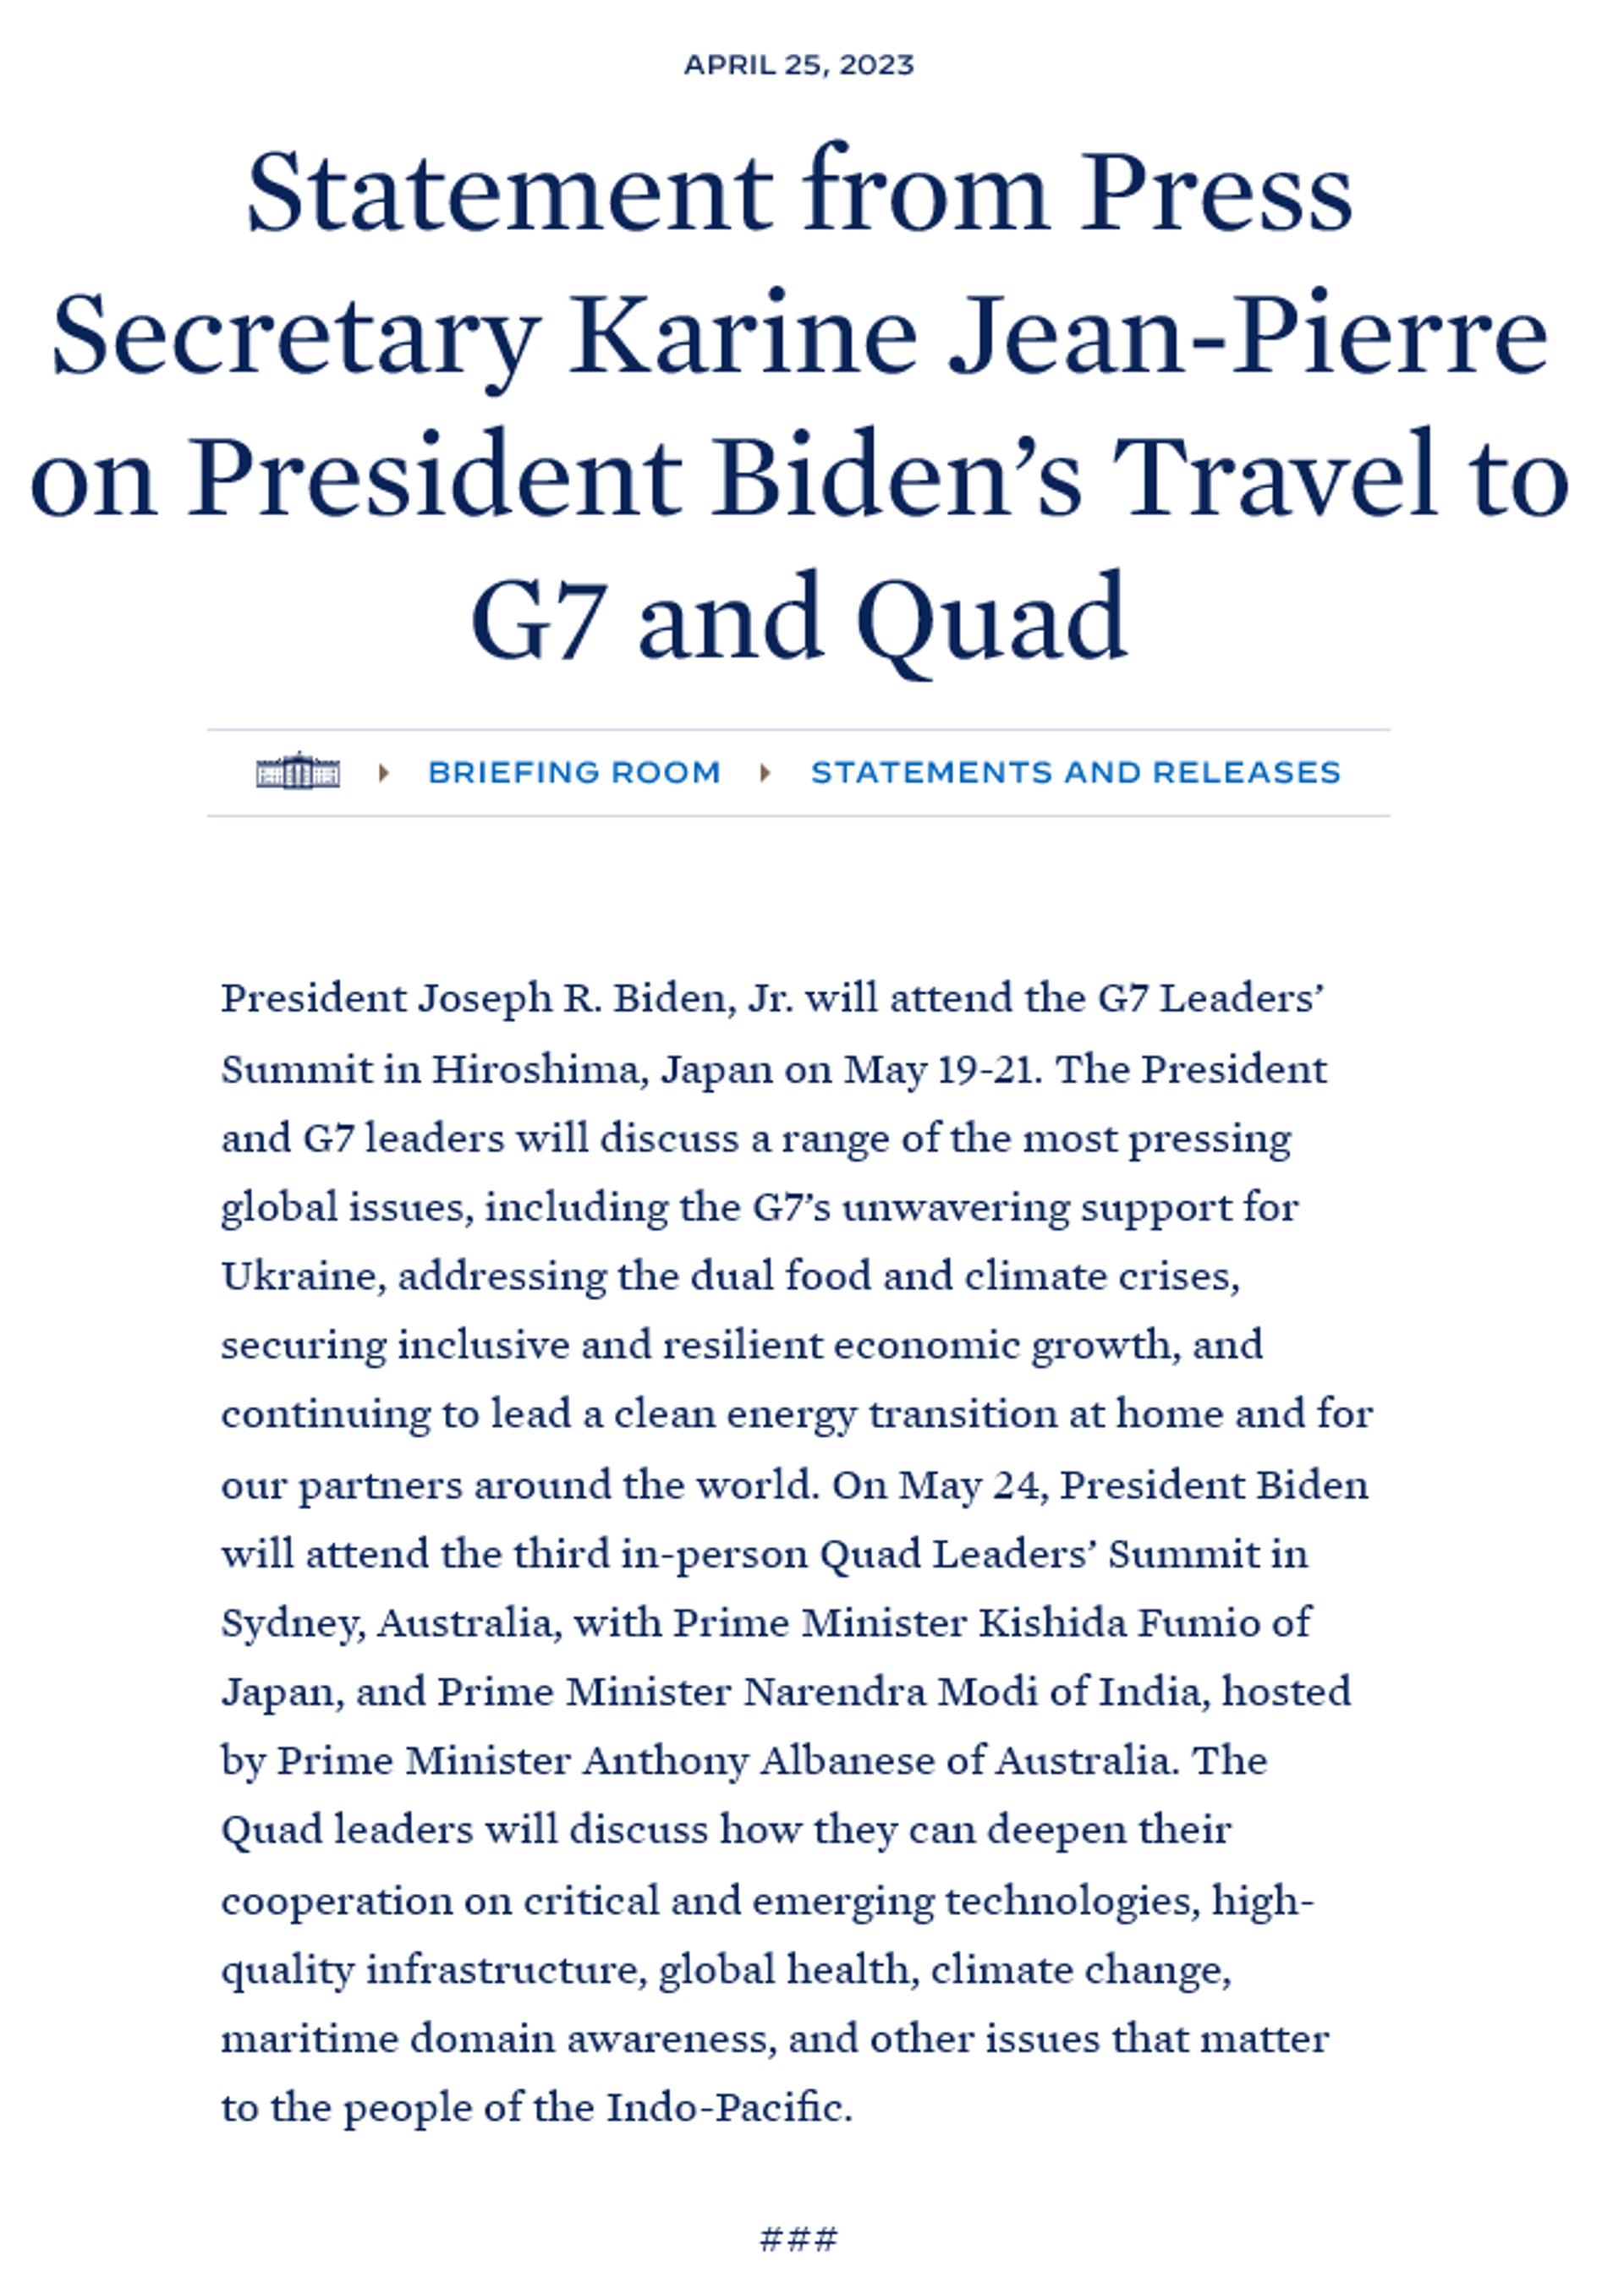 Statement from Press Secretary Karine Jean-Pierre on President Biden’s Travel to G7 and Quad  - Sputnik International, 1920, 26.04.2023